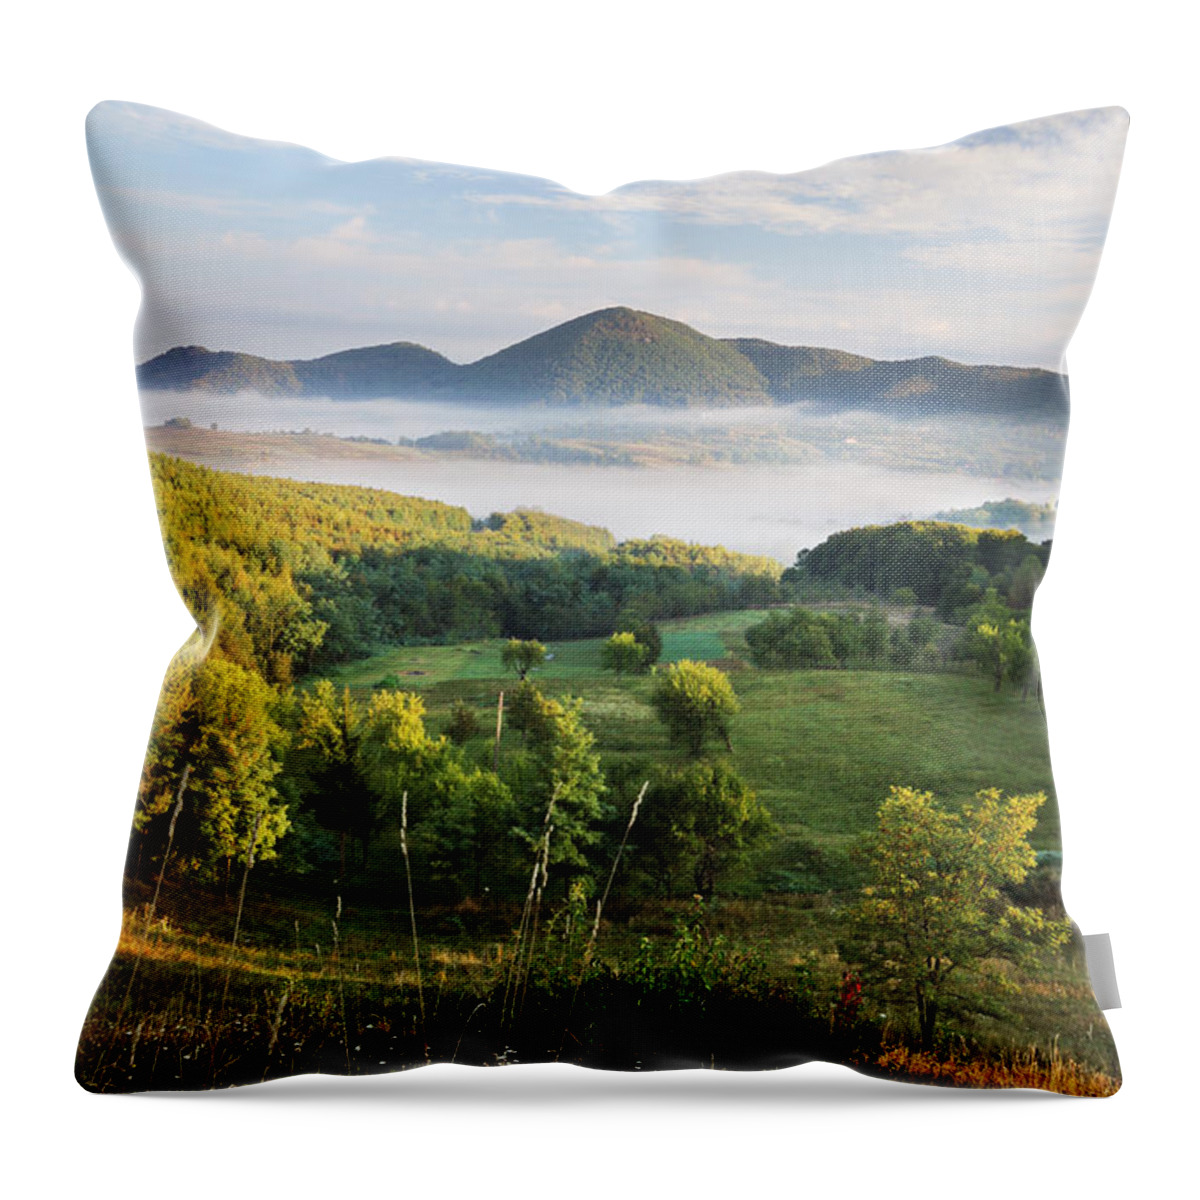 Transylvania Throw Pillow featuring the photograph Summer morning by Mircea Costina Photography